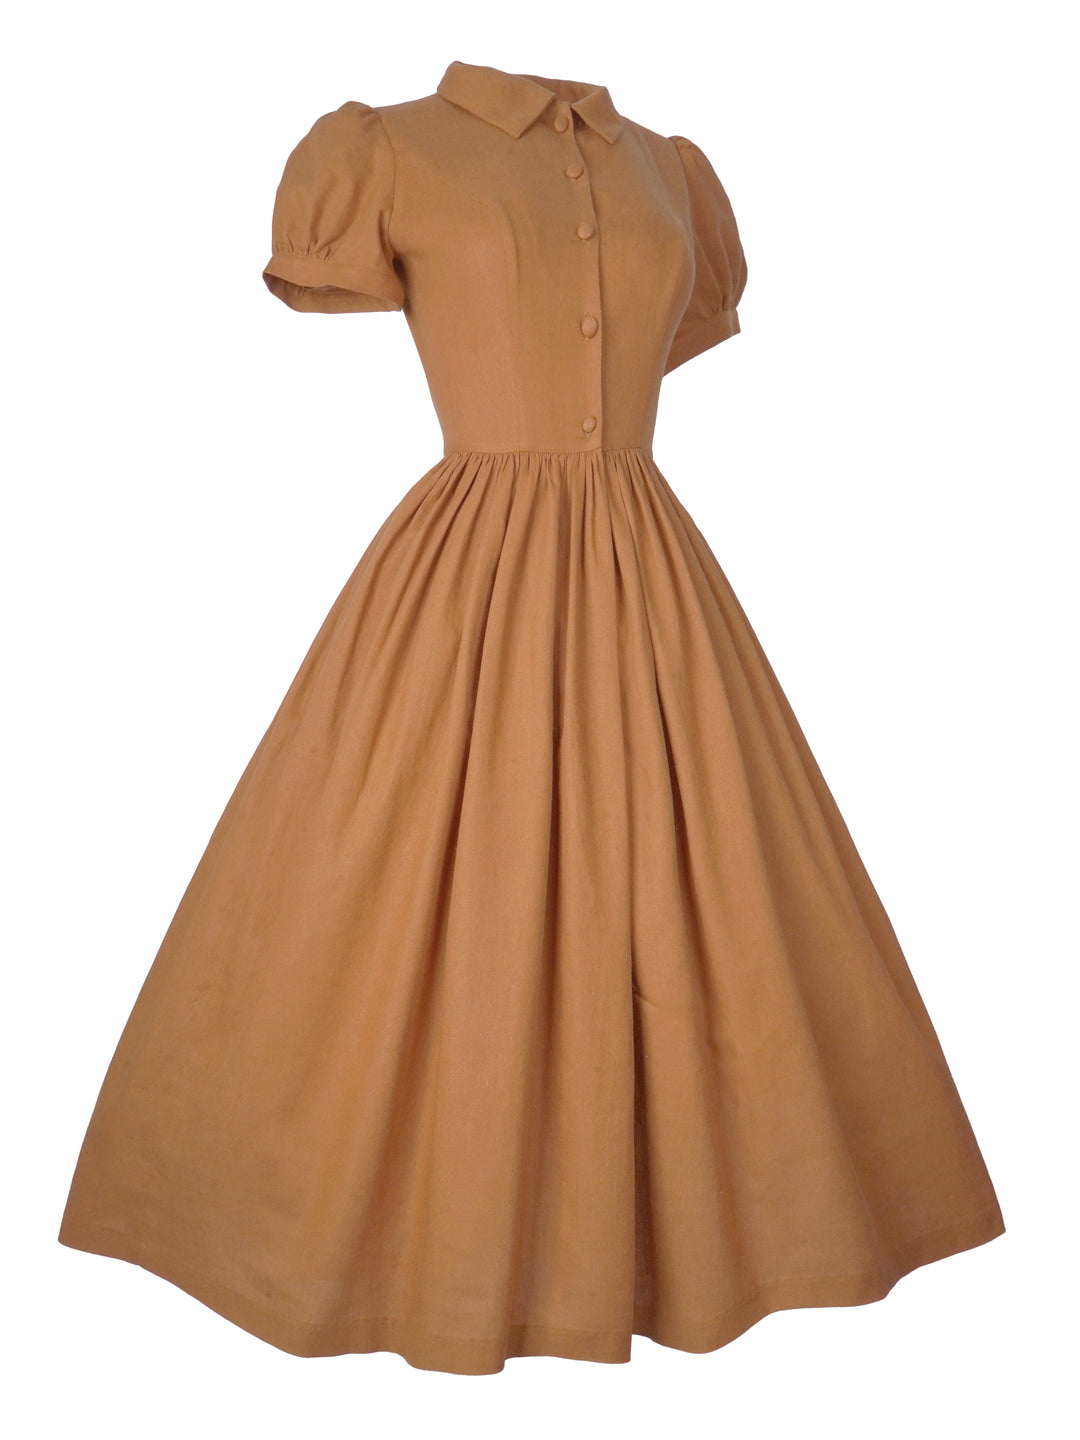 MTO - Judy Dress in Caramel Linen